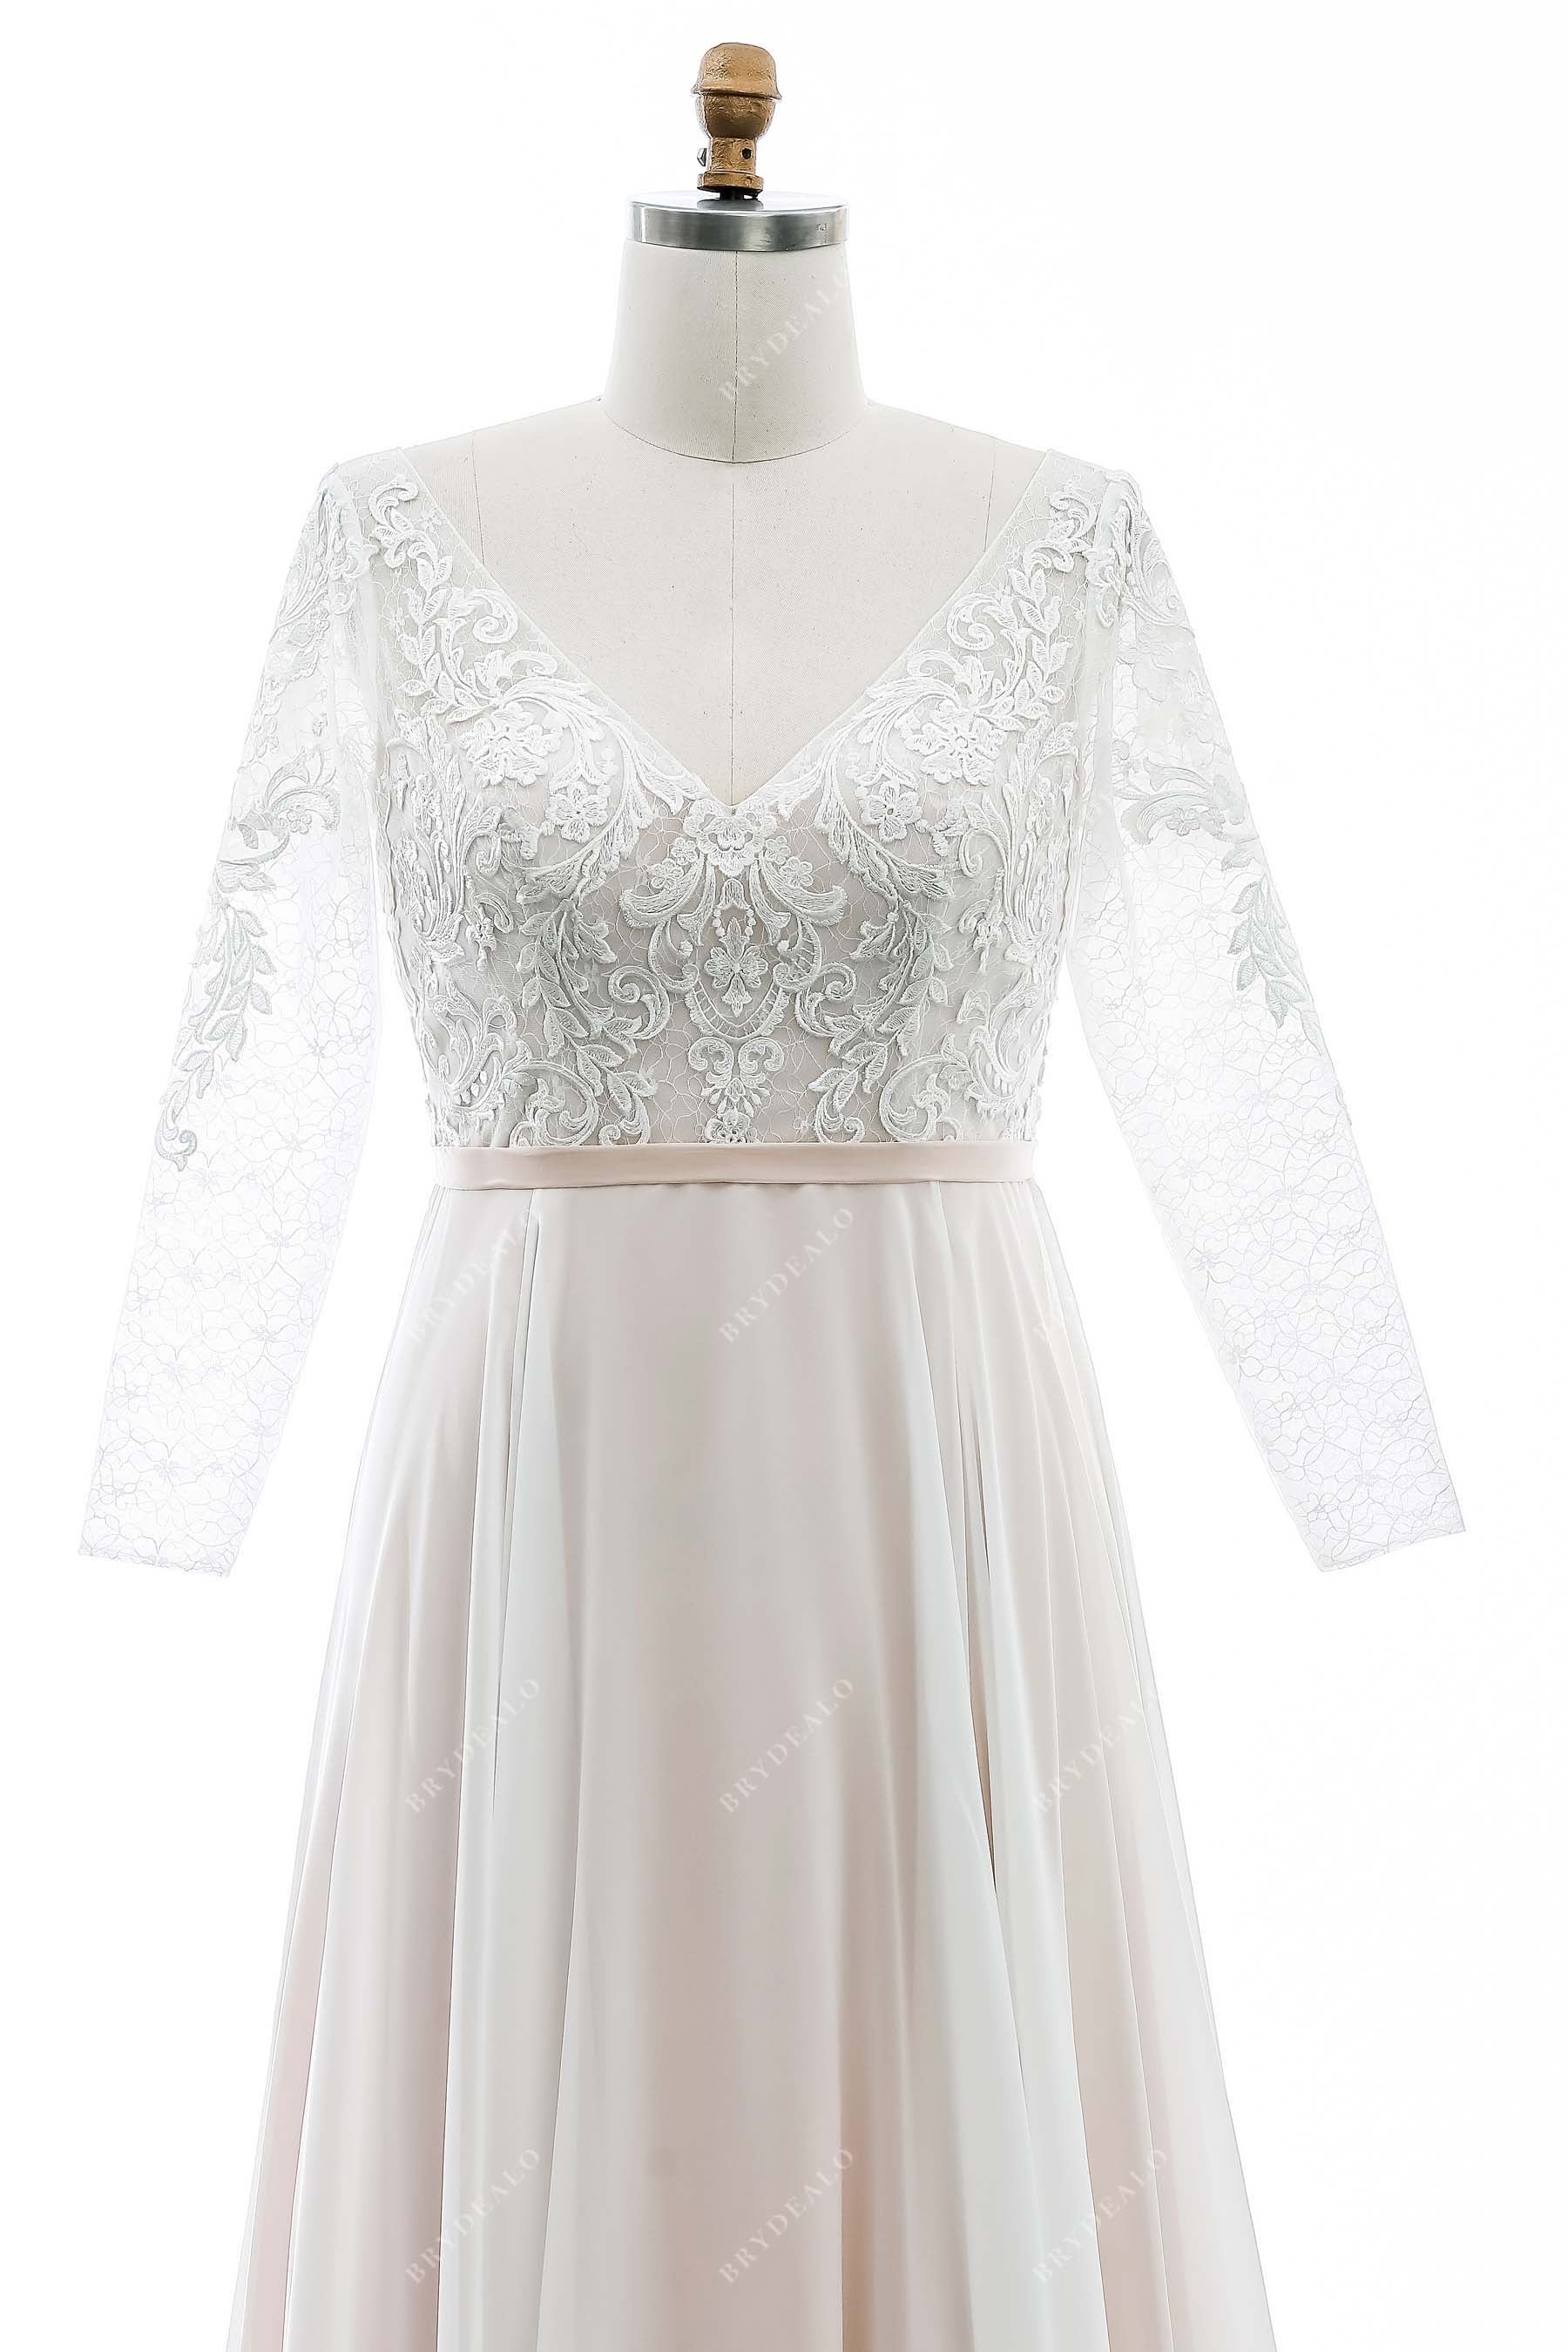 V-neck lace bohemian wedding dress